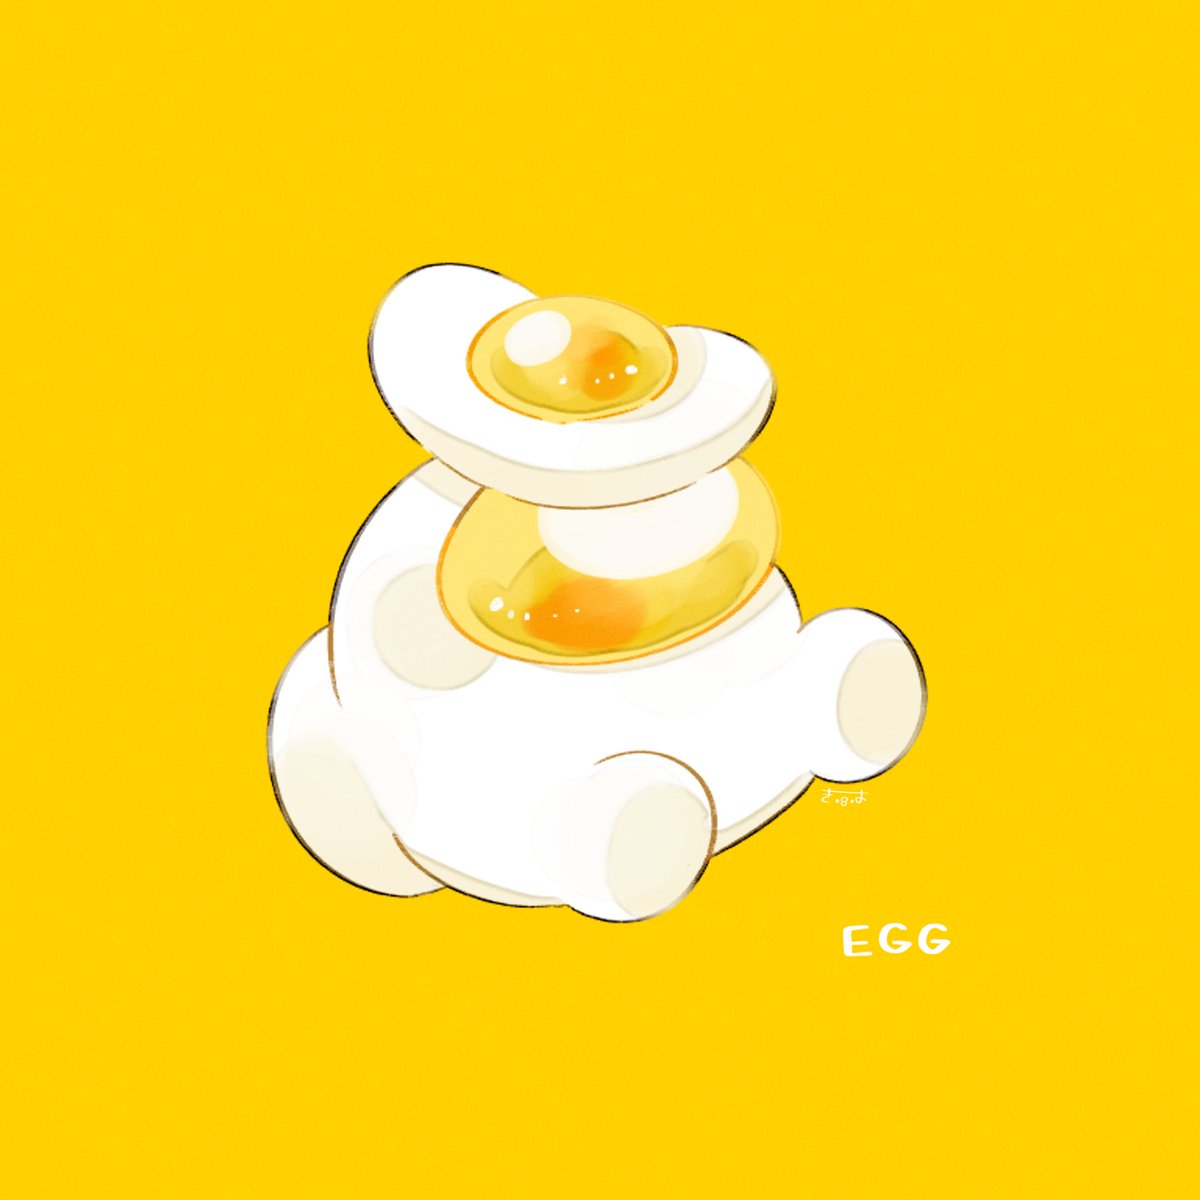 no humans food egg (food) simple background fried egg yellow background holding  illustration images